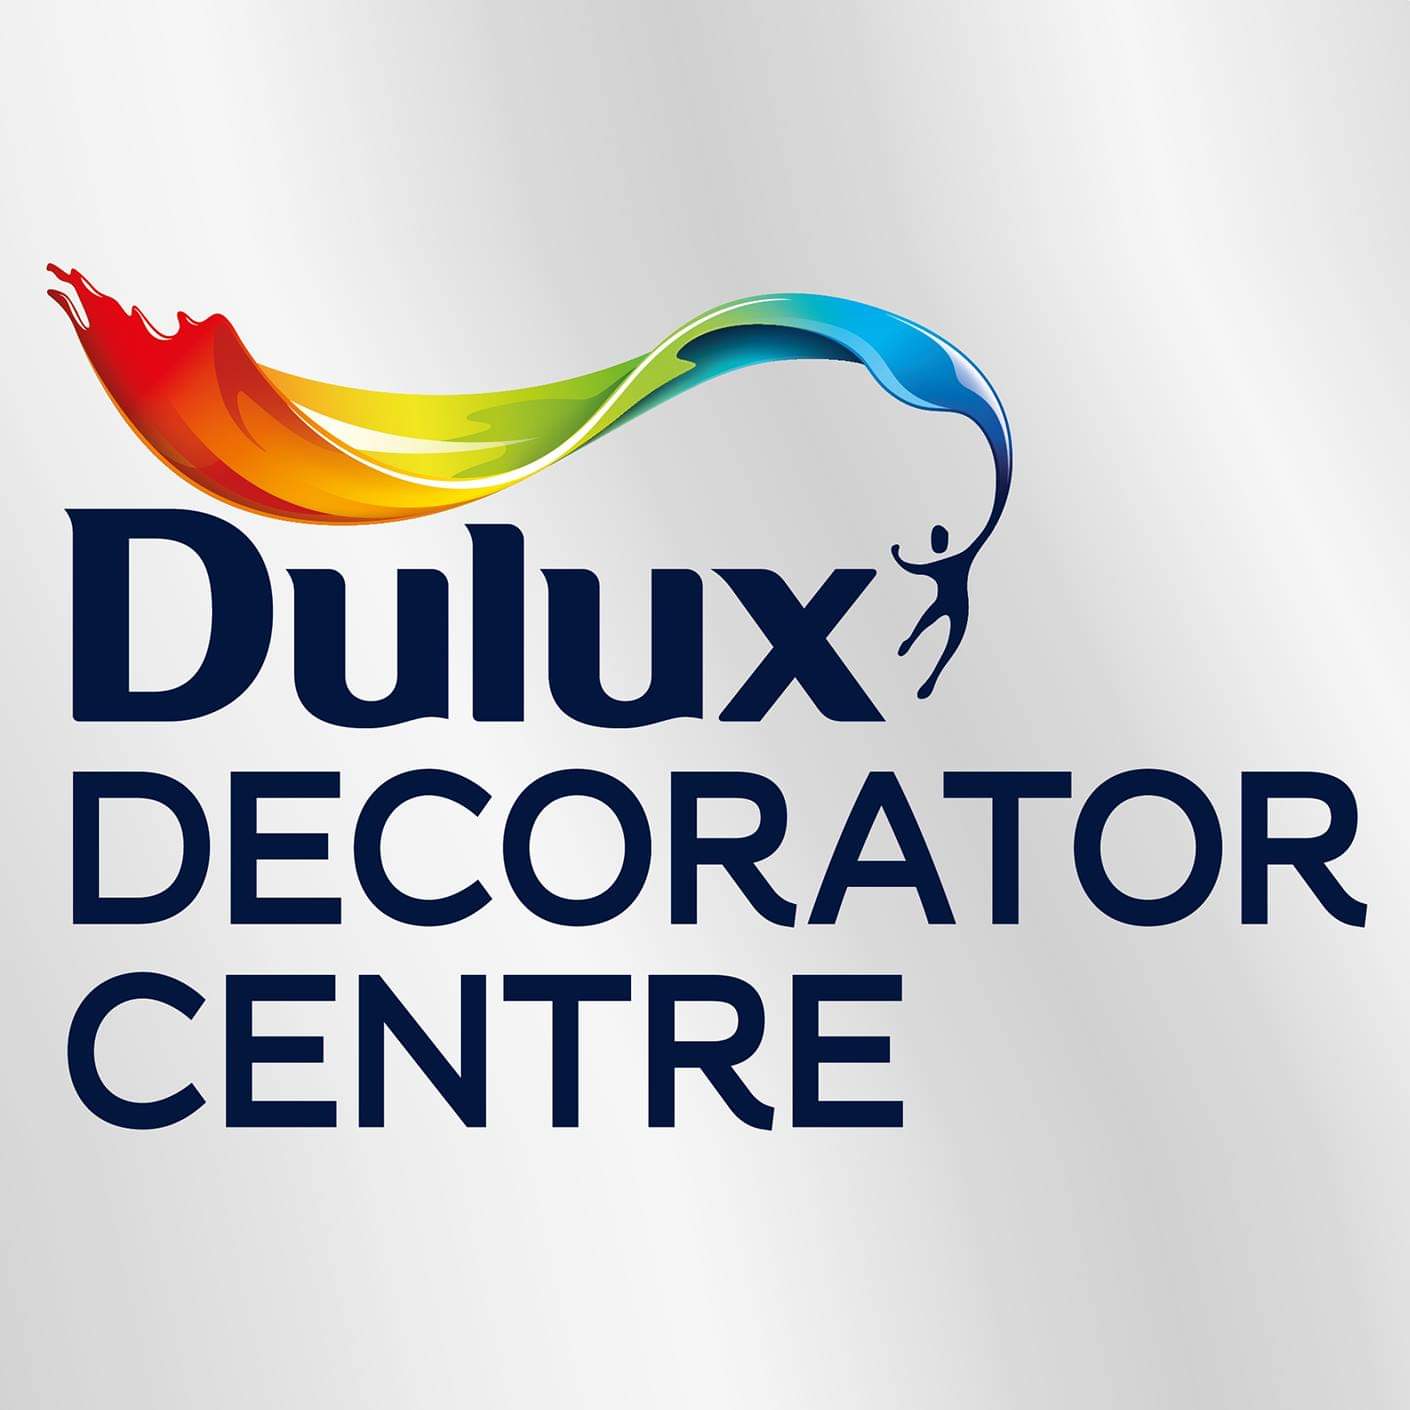 Dulux Decorator Centre Coupons & Promo Codes